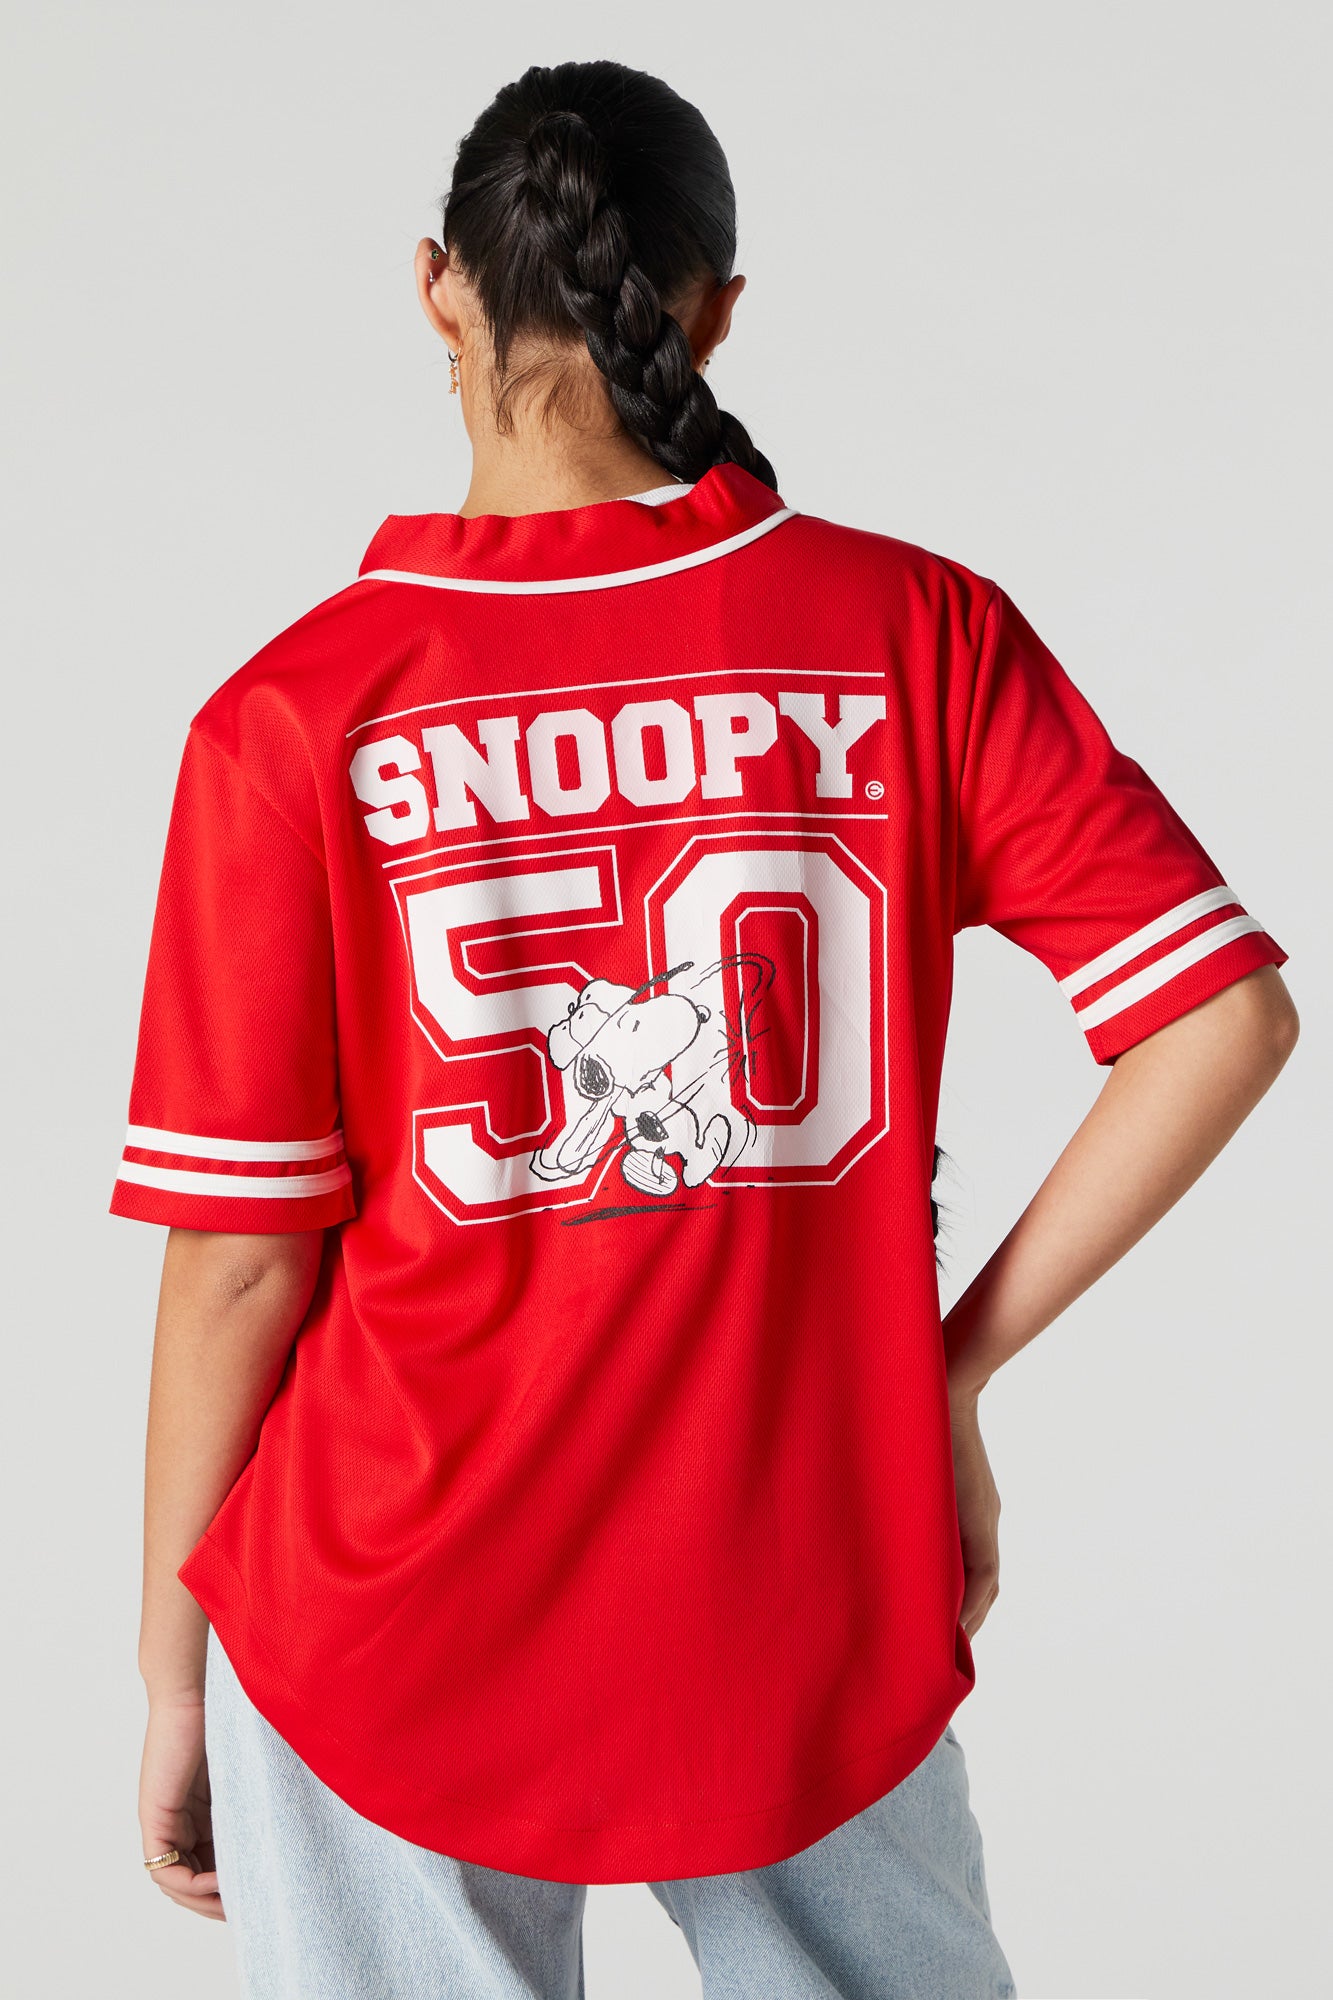 Snoopy Graphic Baseball Jersey